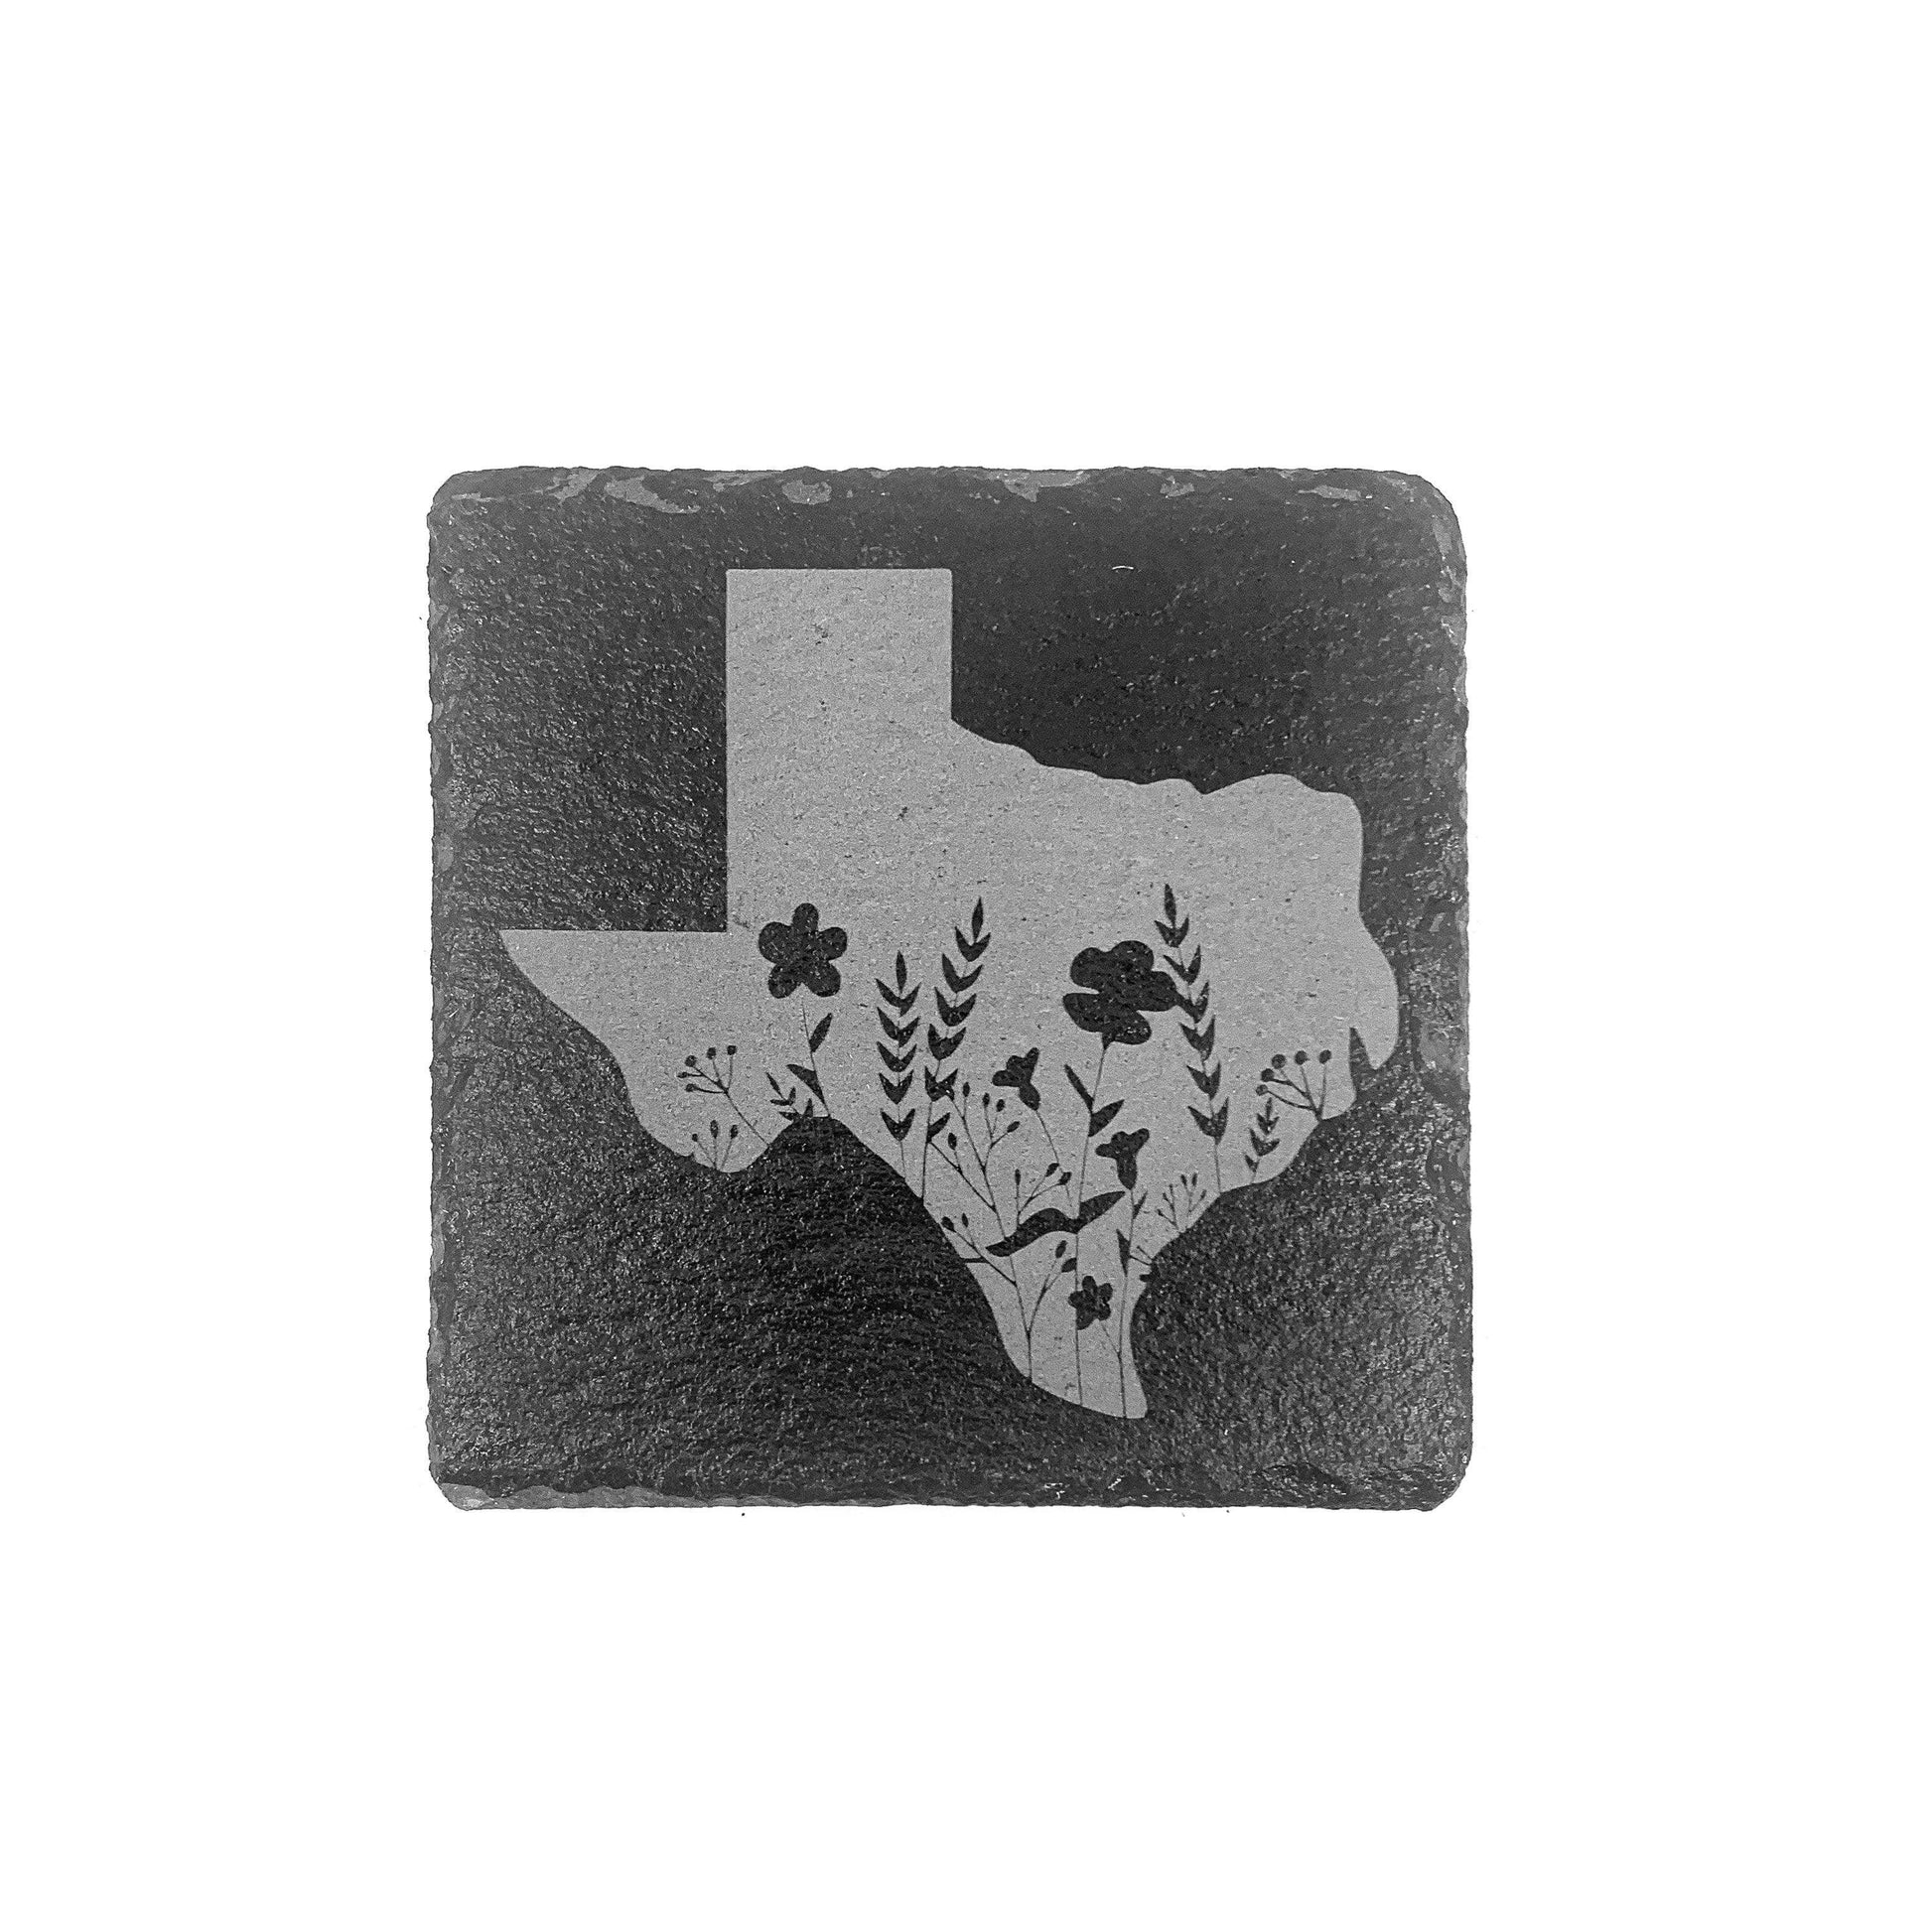 Wimberley Puzzle Company Coasters Texas Wildflowers & Cactus Slate Coasters - Set of 4